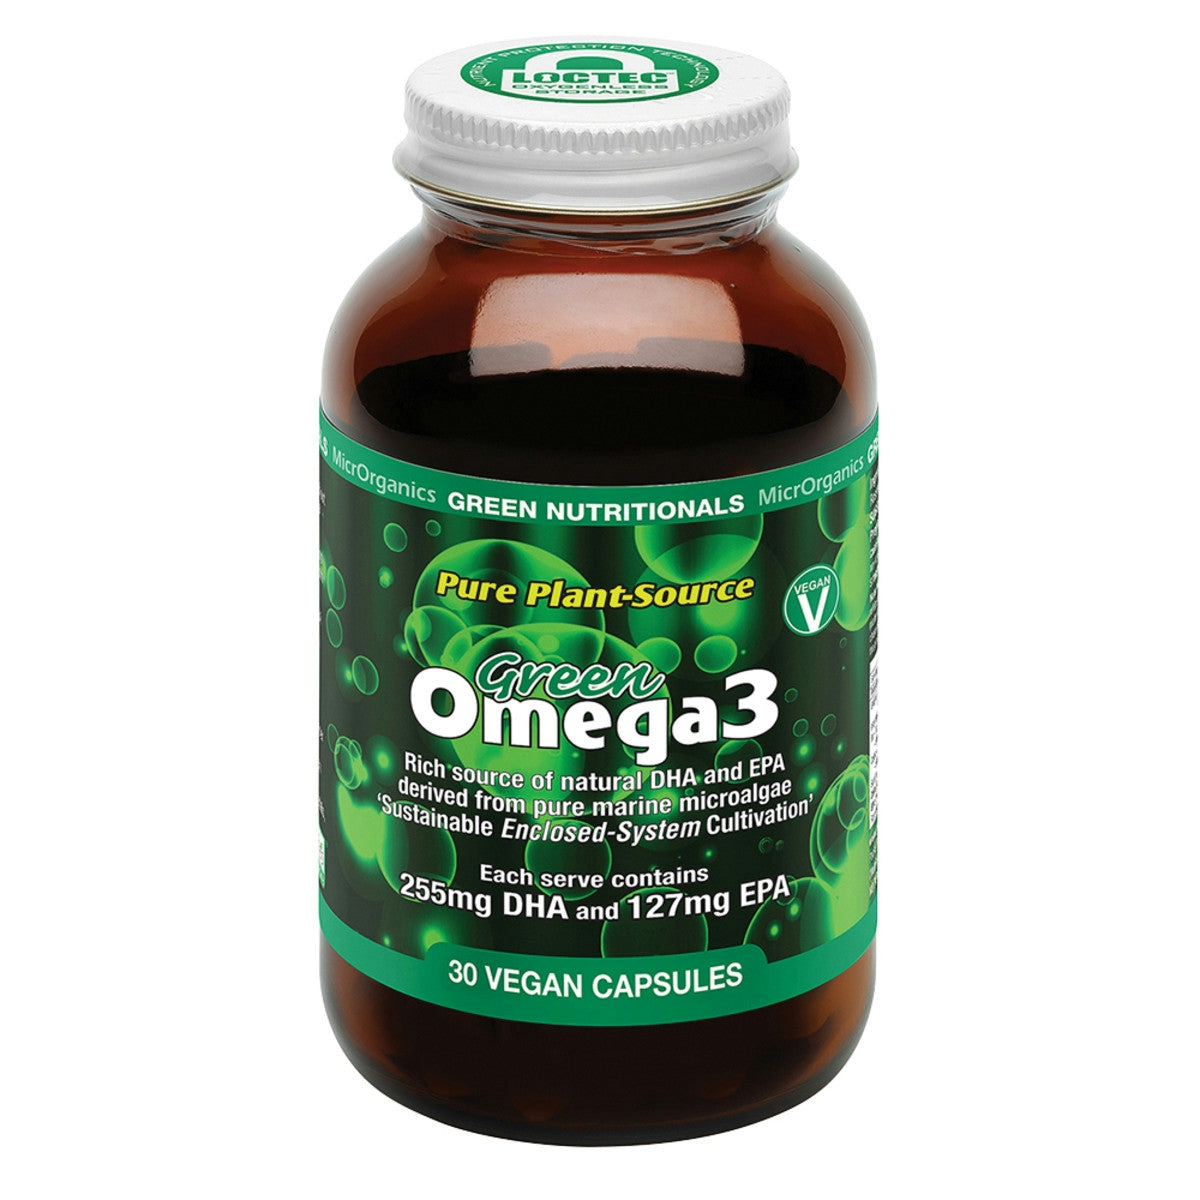 MicrOrganics Green Nutritionals Pure Plant-Source Green Omega 3  - Vegan Capsules